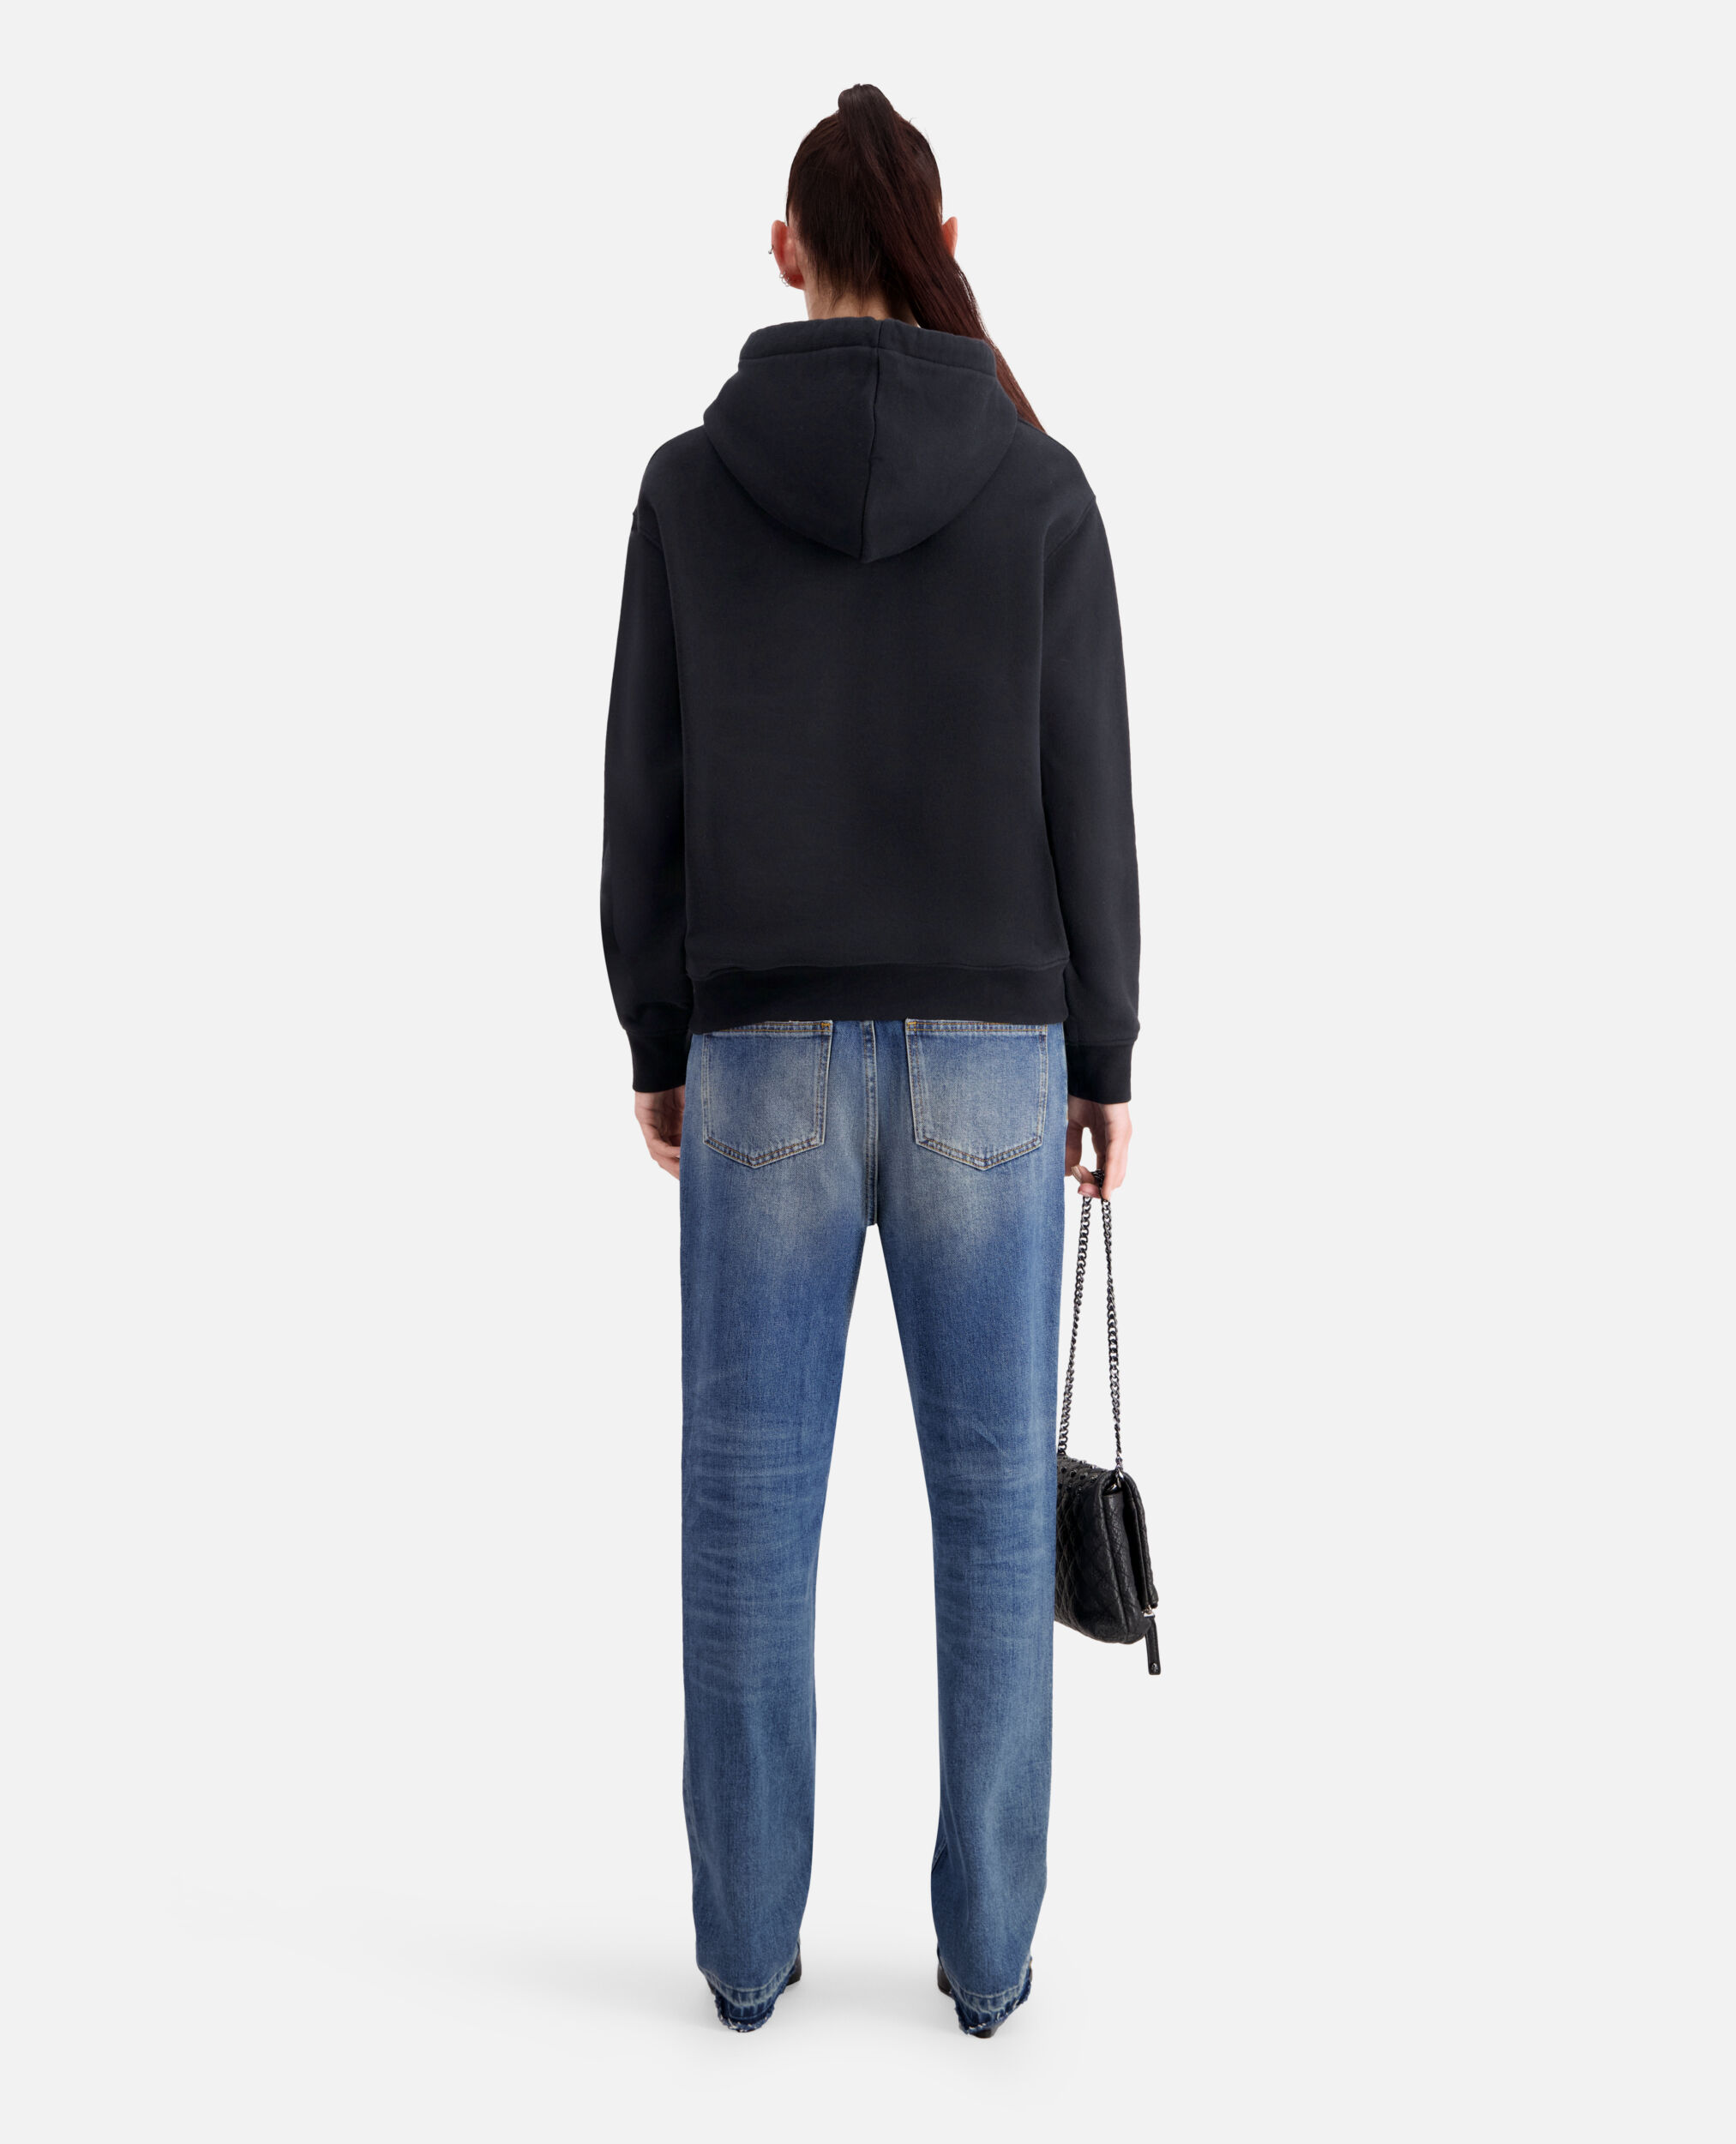 Damen Schwarzes Kapuzensweatshirt mit Siebdruck, BLACK WASHED, hi-res image number null